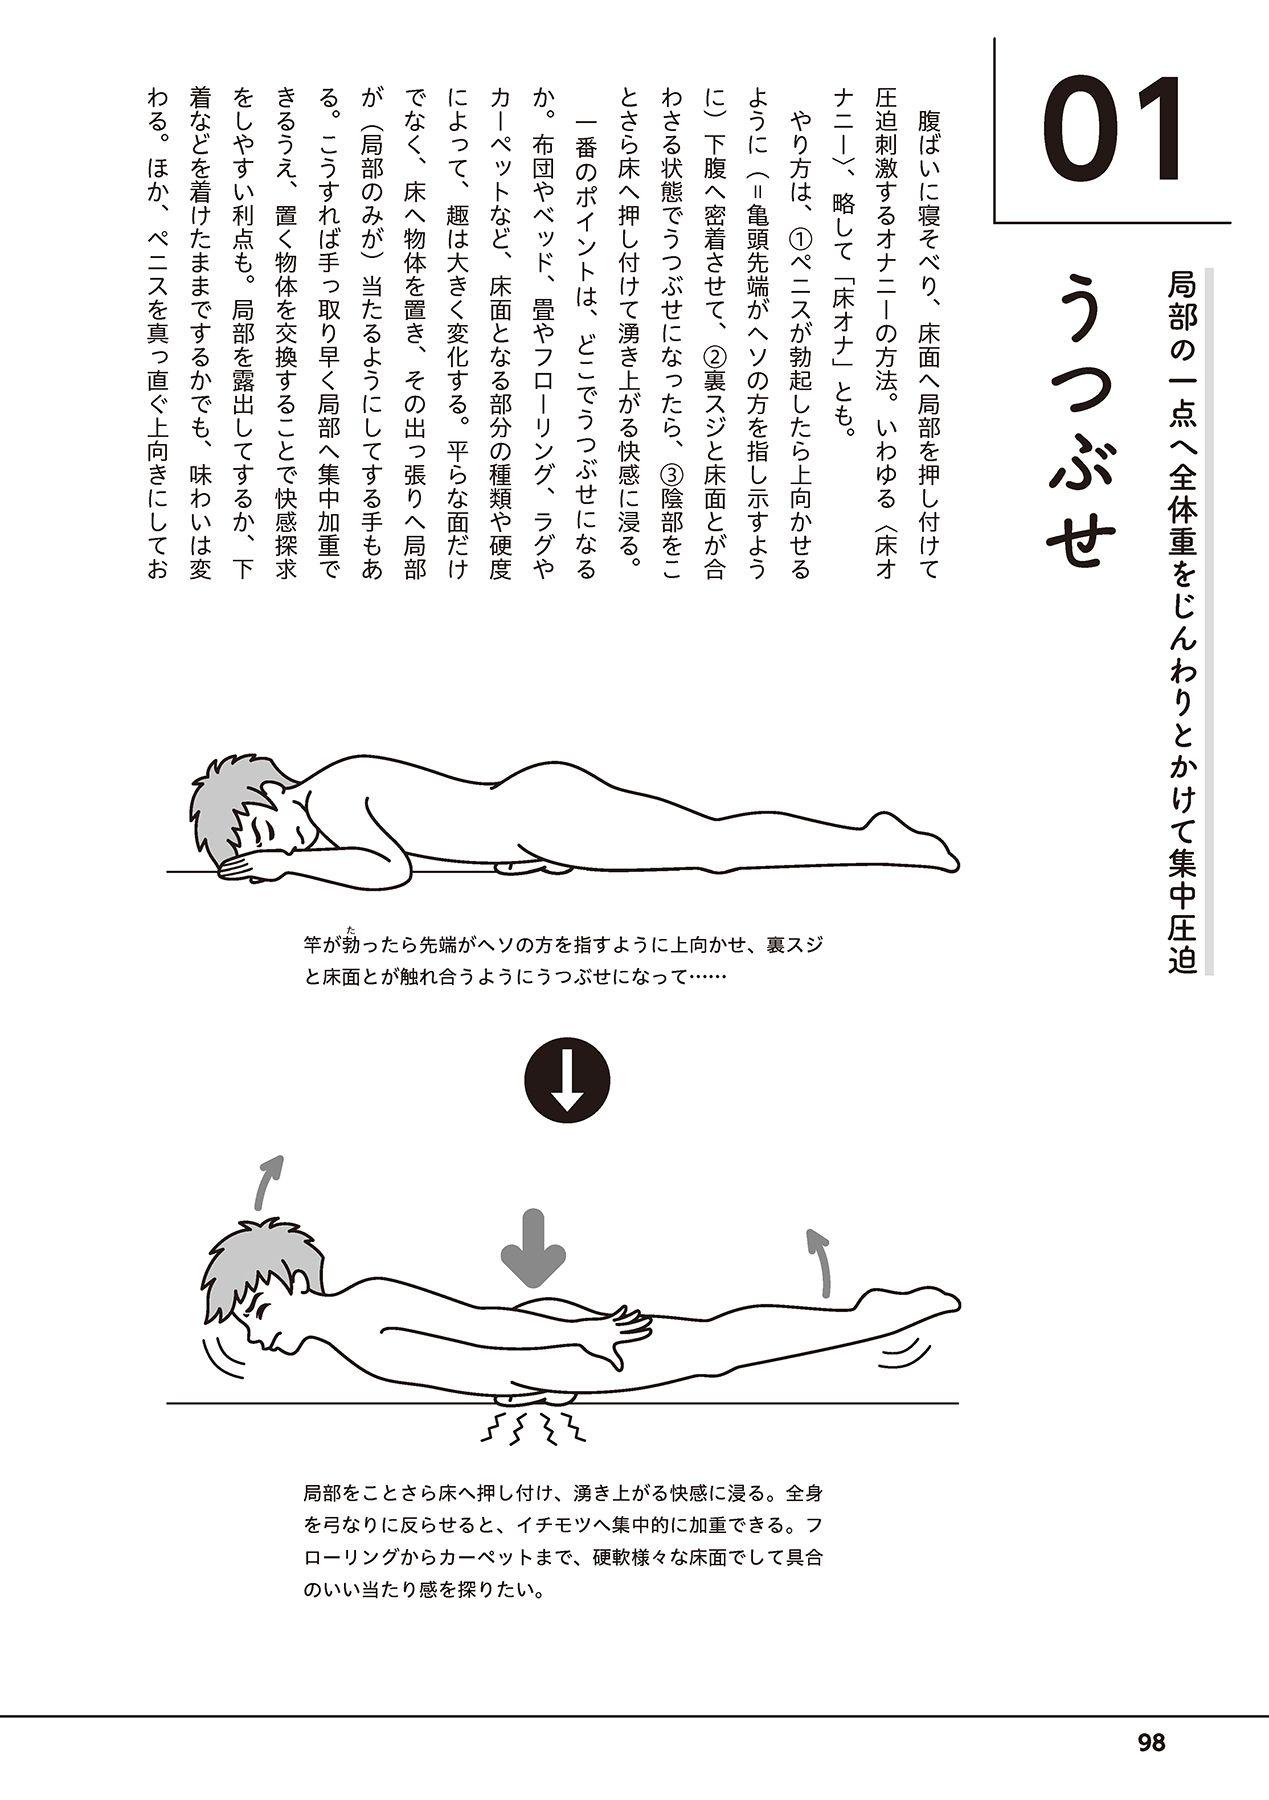 Otoko no Jii Onanie Kanzen Manual Illustration Han...... Onanie Play 99